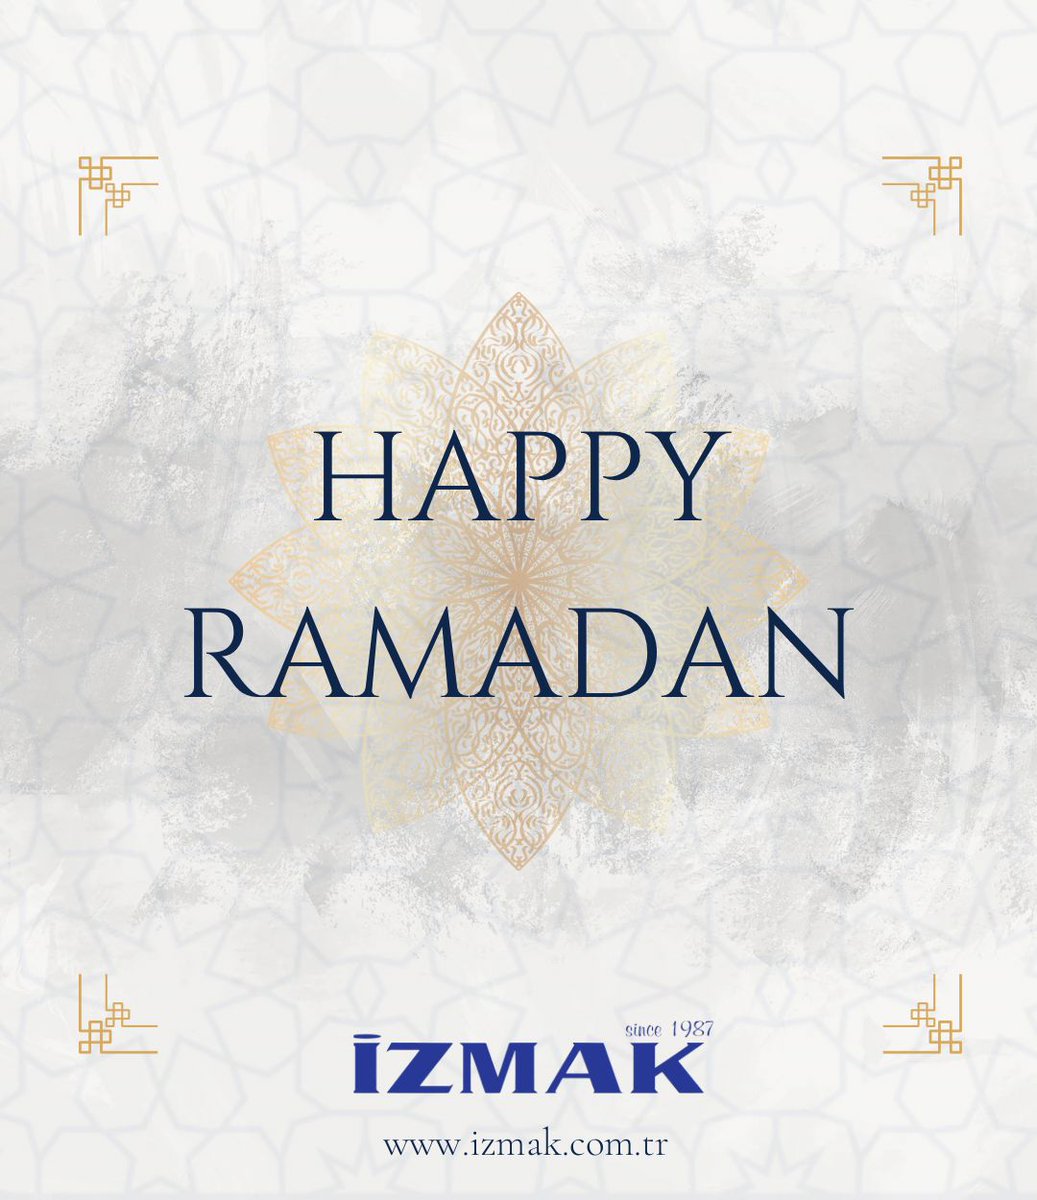 We wish you a Happy Ramadan!

Ramazan Bayramınız Kutlu Olsun!

#izmak #industrialkitchenequipment #cateringequipment #pizzaoven #refrigerator #pizzeria #restaurant #endüstriyelmutfak #pizza #catering